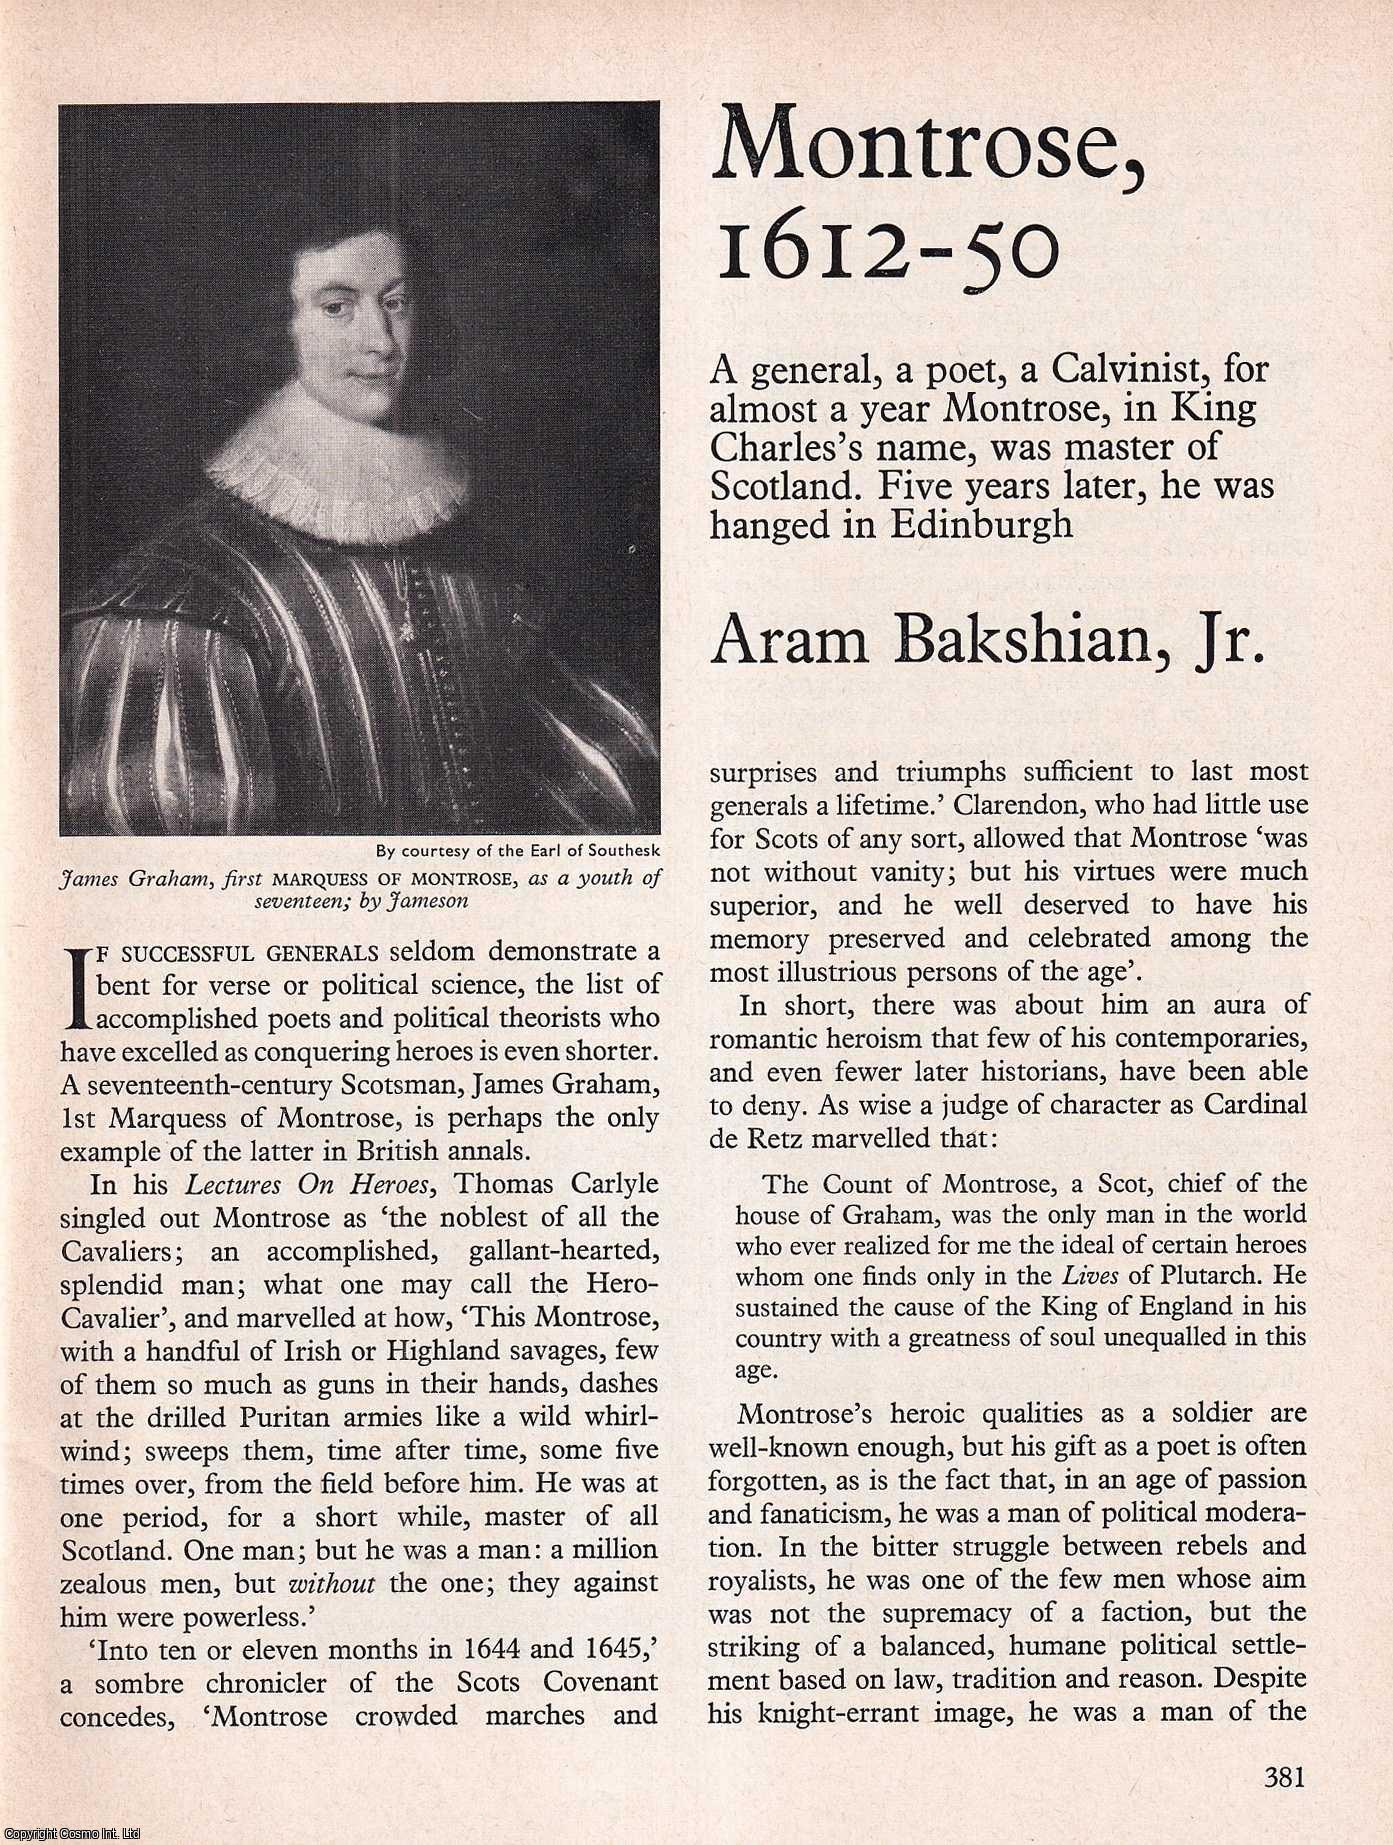 Aram Bakshian Jr - Montrose: A General Poet & Calvinist, 1612-50. An original article from History Today magazine, 1973.